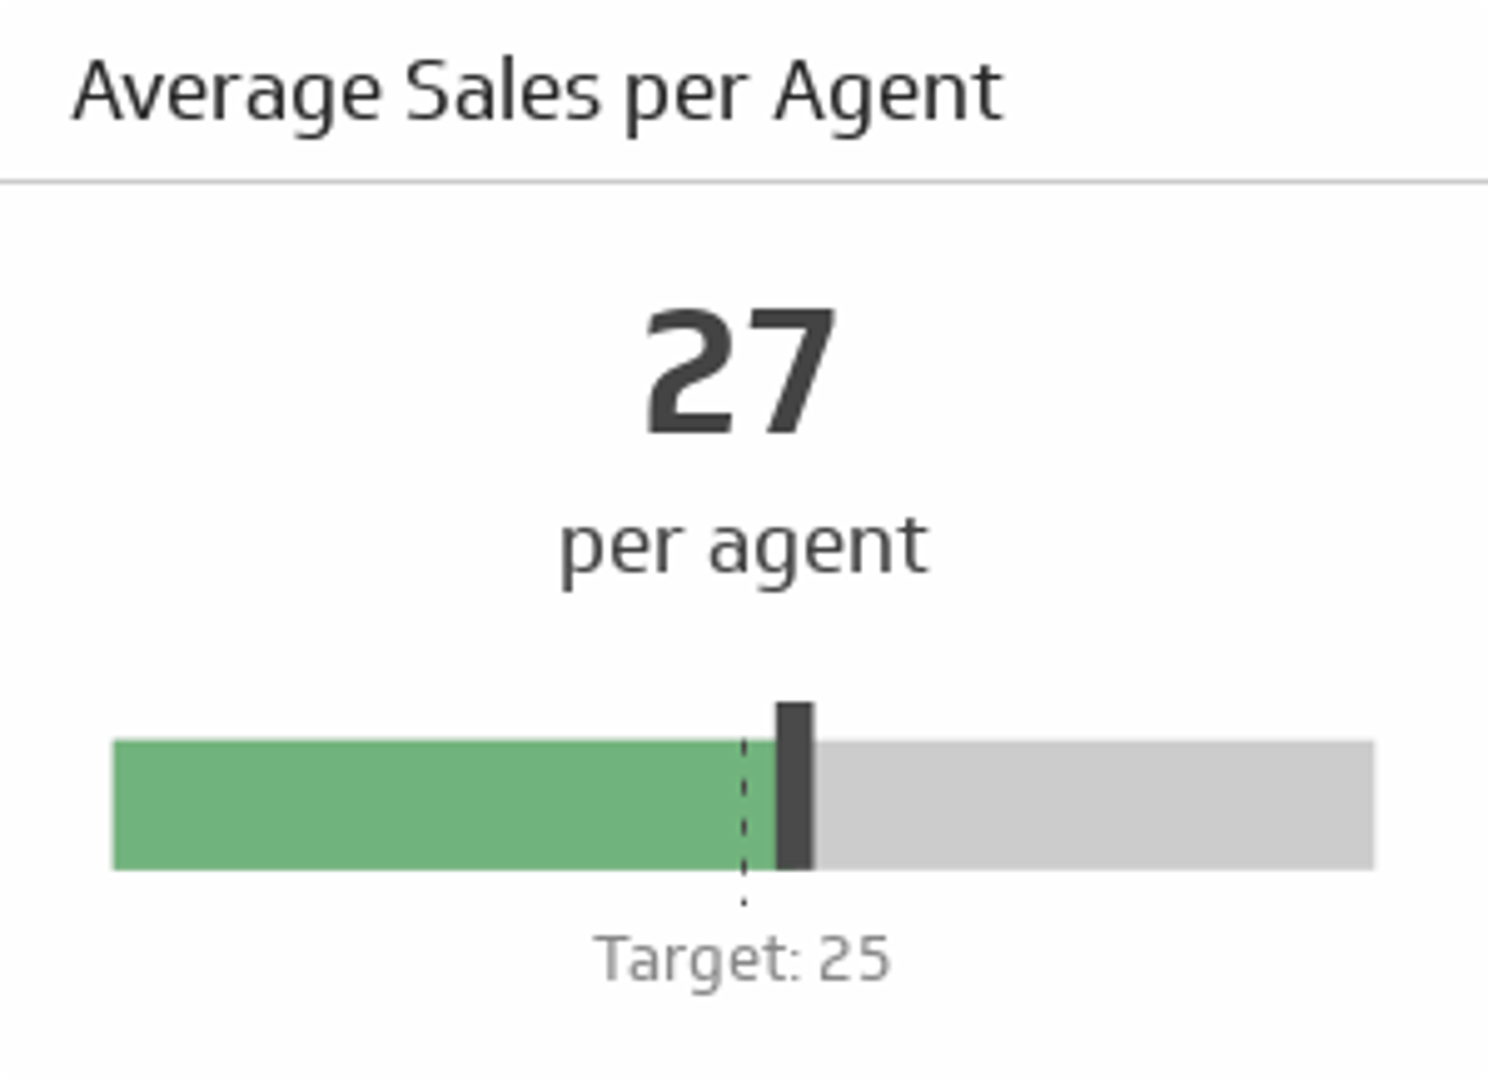 Call Center KPI Example - Average Sales per Agent Metric